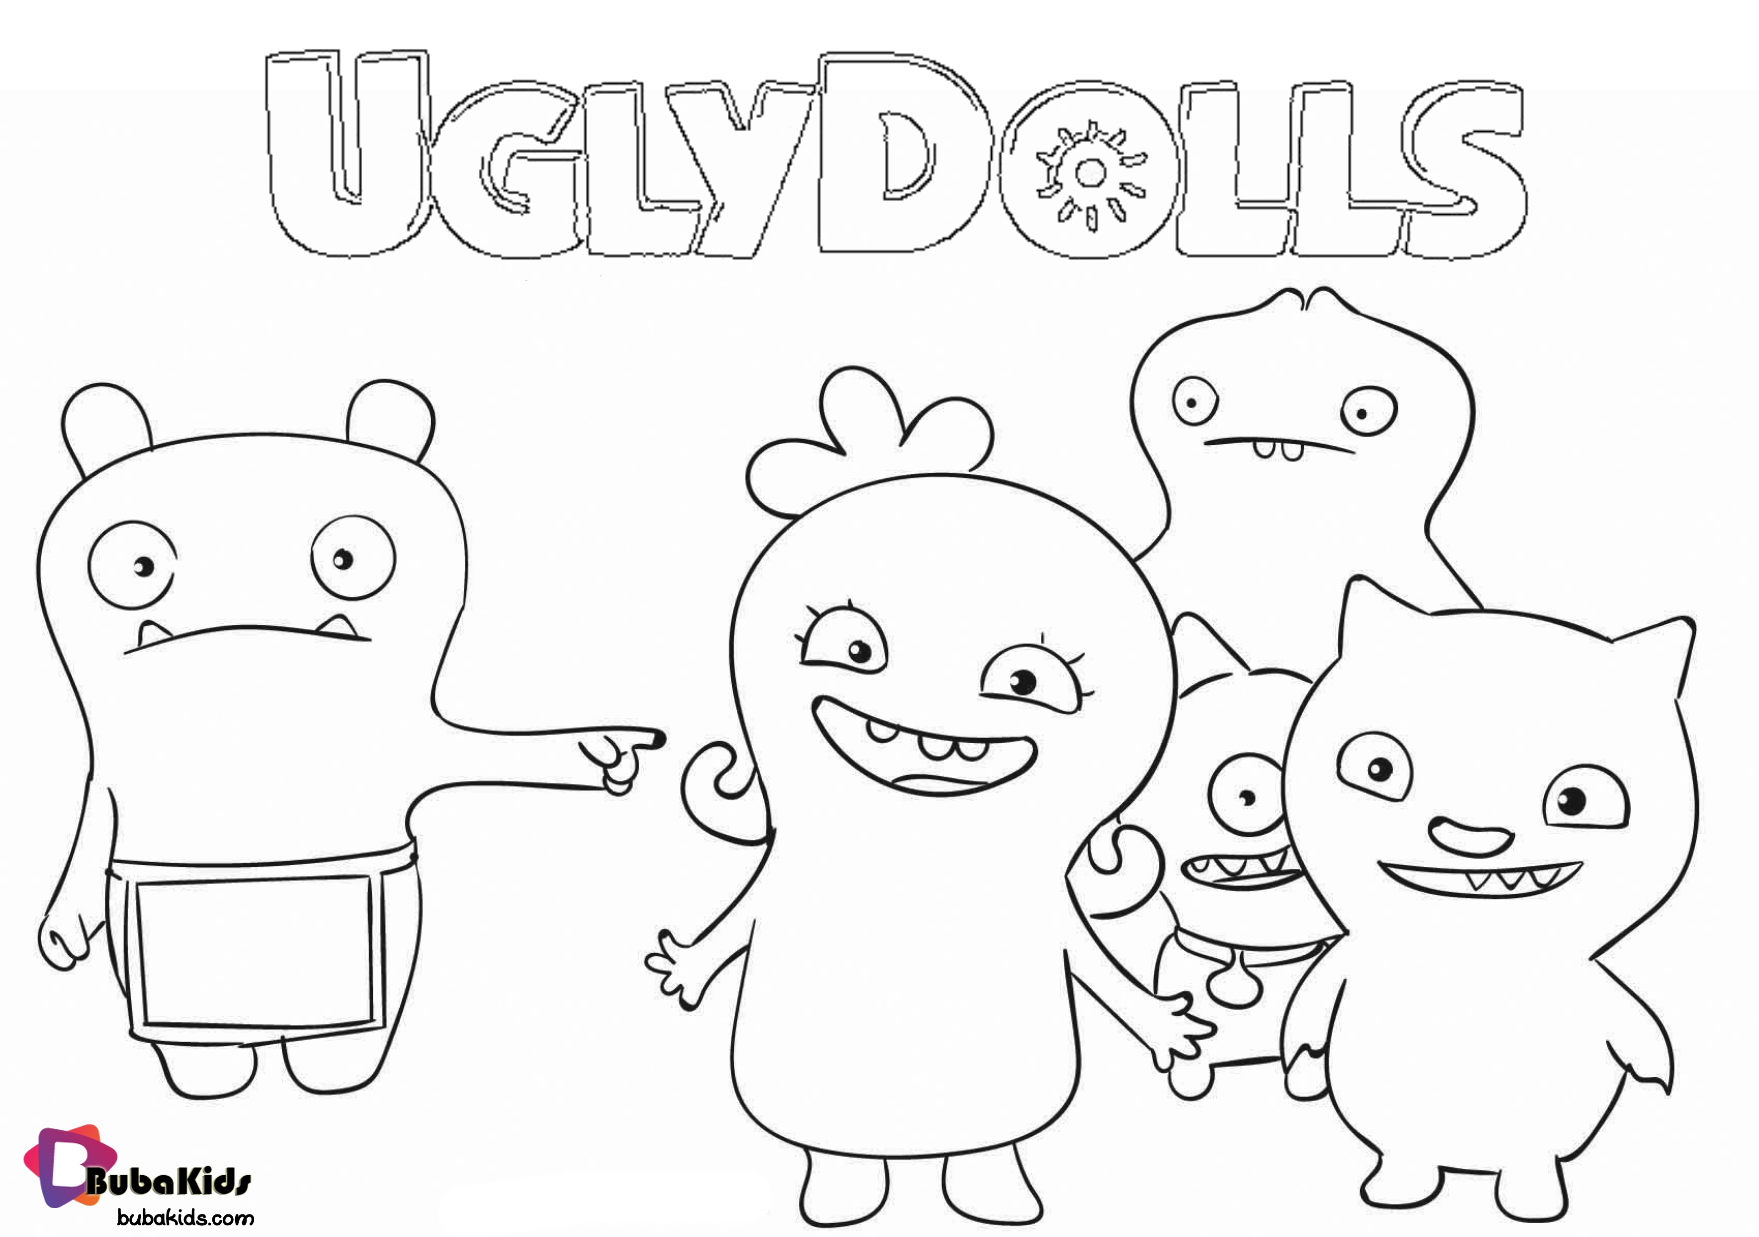 Free printable Uglydolls coloring page.